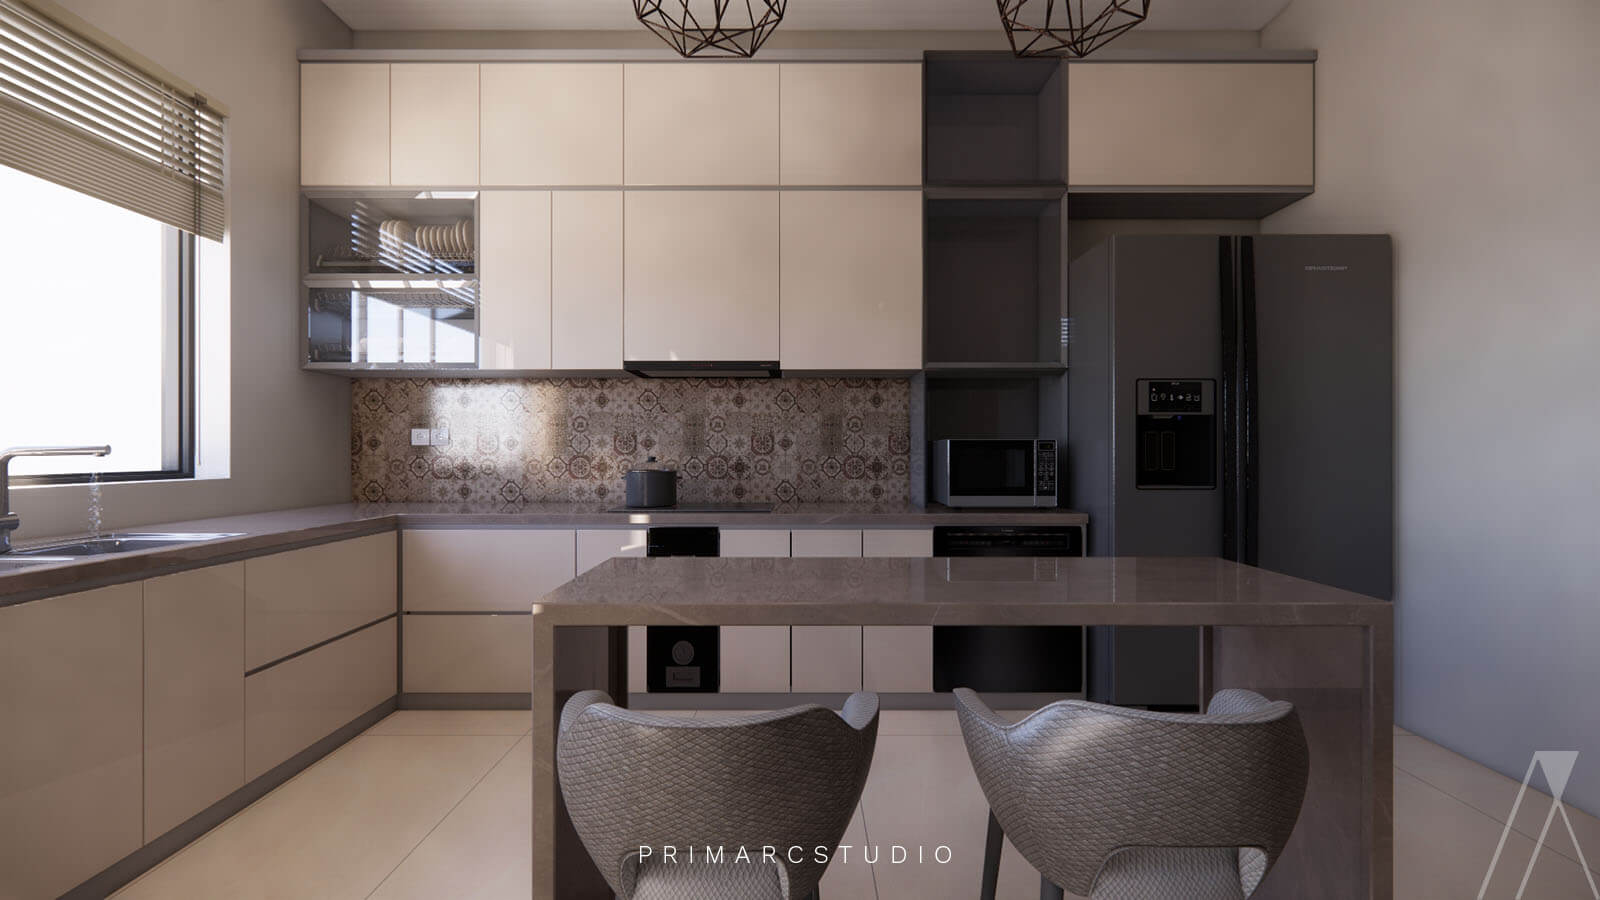 Kitchen interior design with cabinets, fridge and sink designed in Naval Anchorage